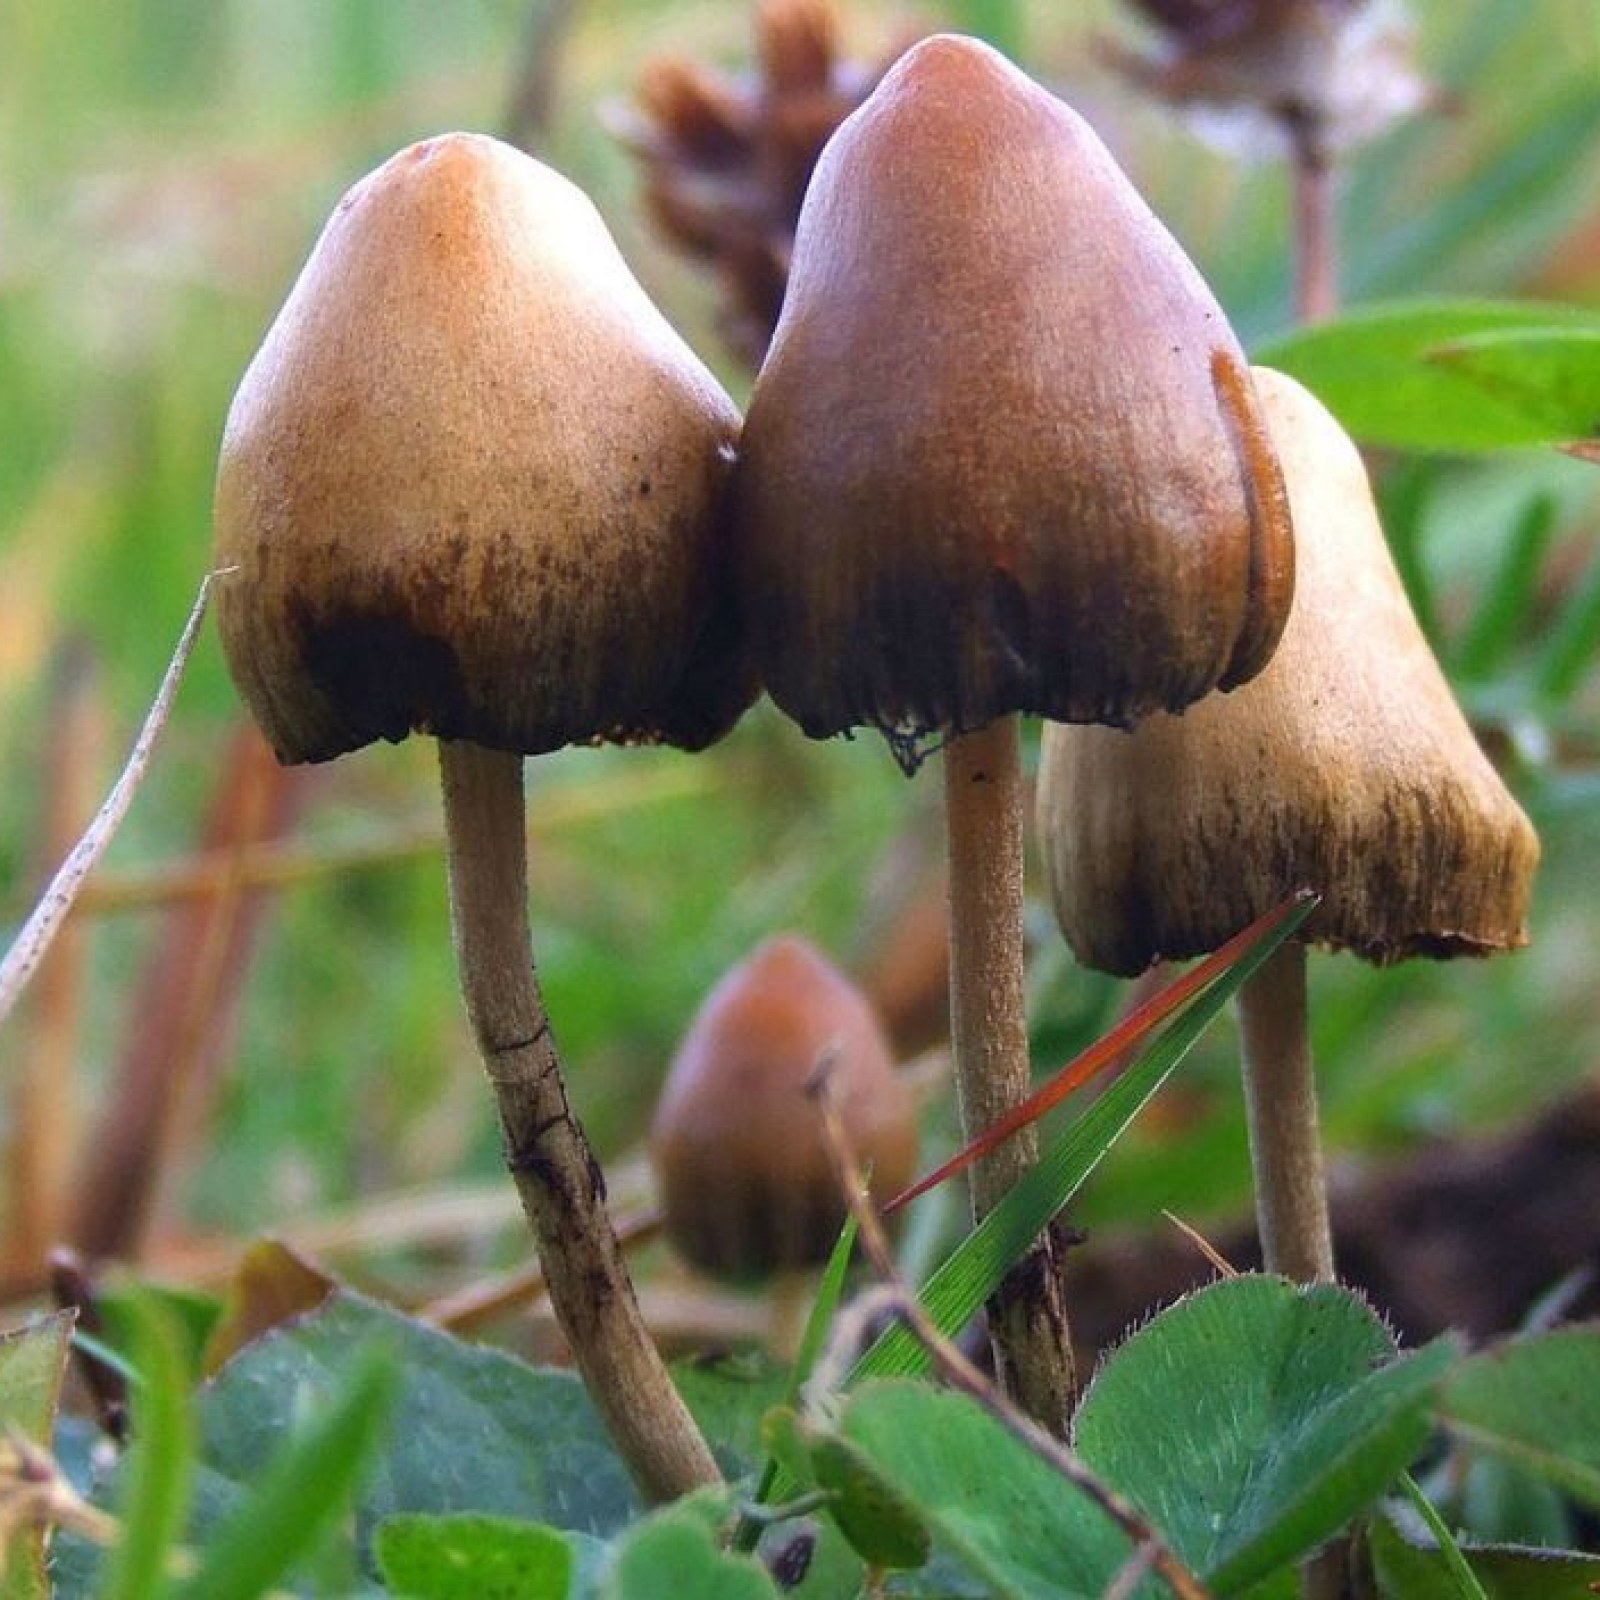 Psychedelic Mushrooms Michigan - All Mushroom Info